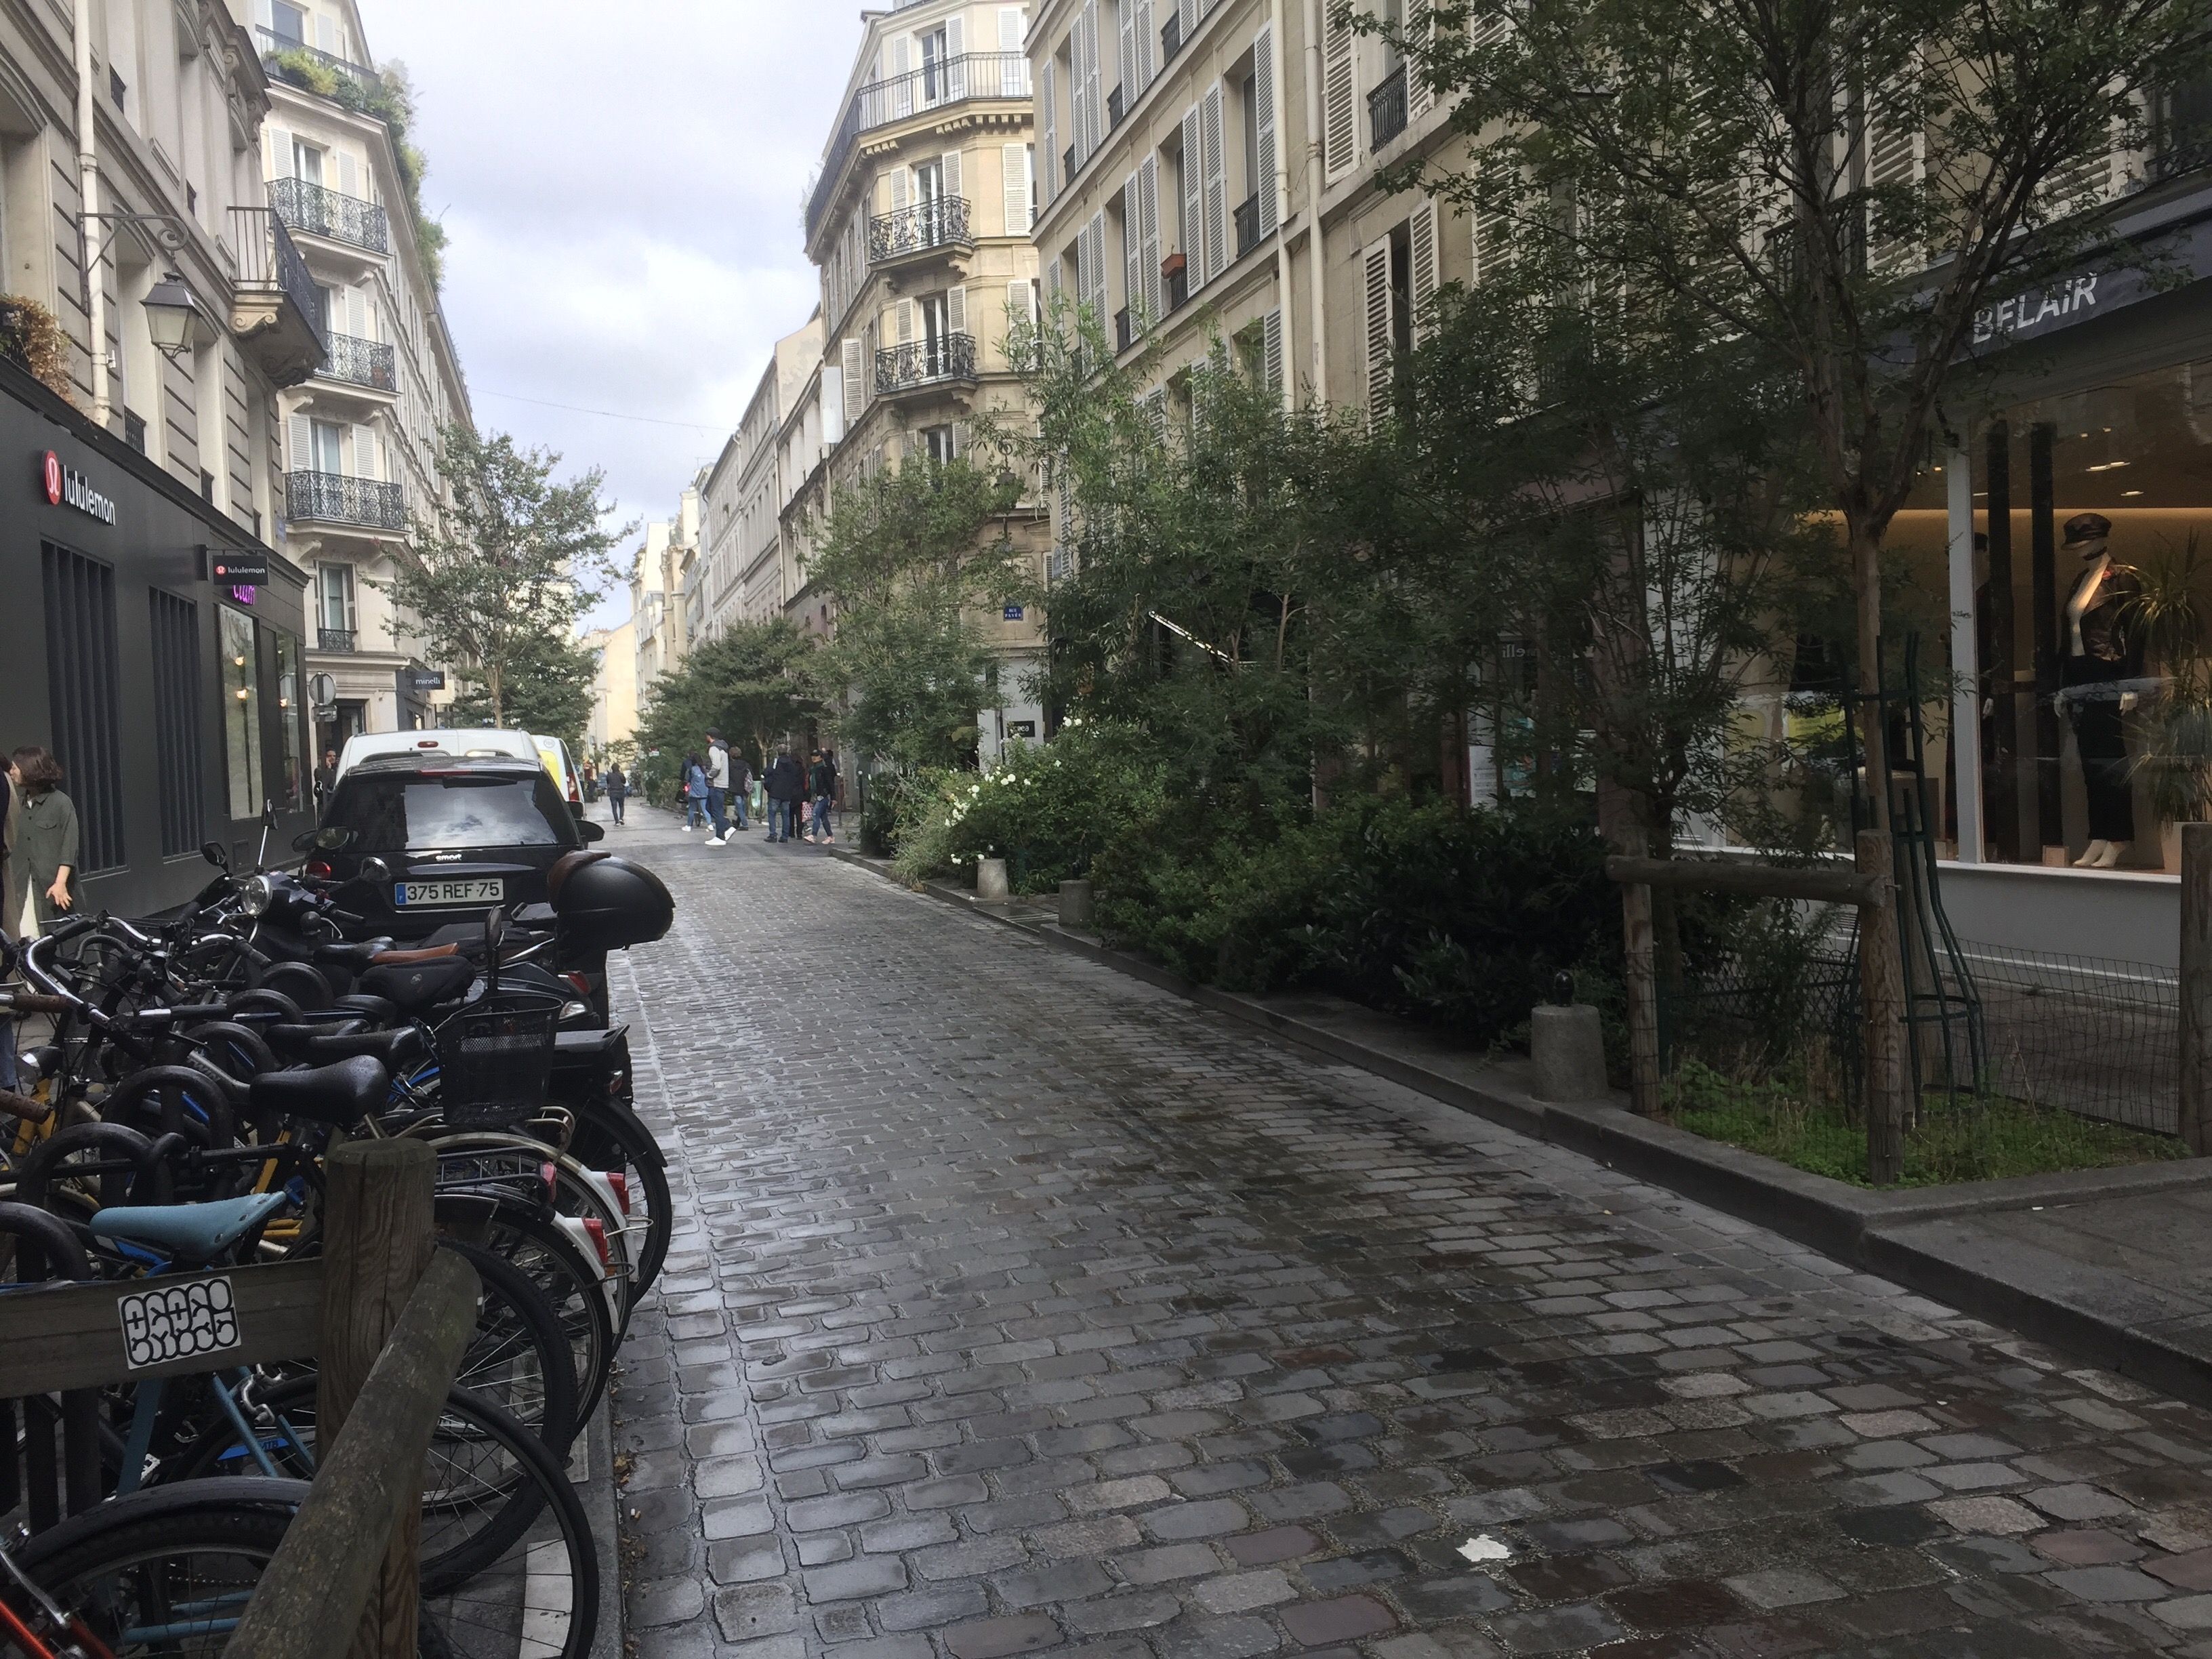 Rue des Rosiers, Paris